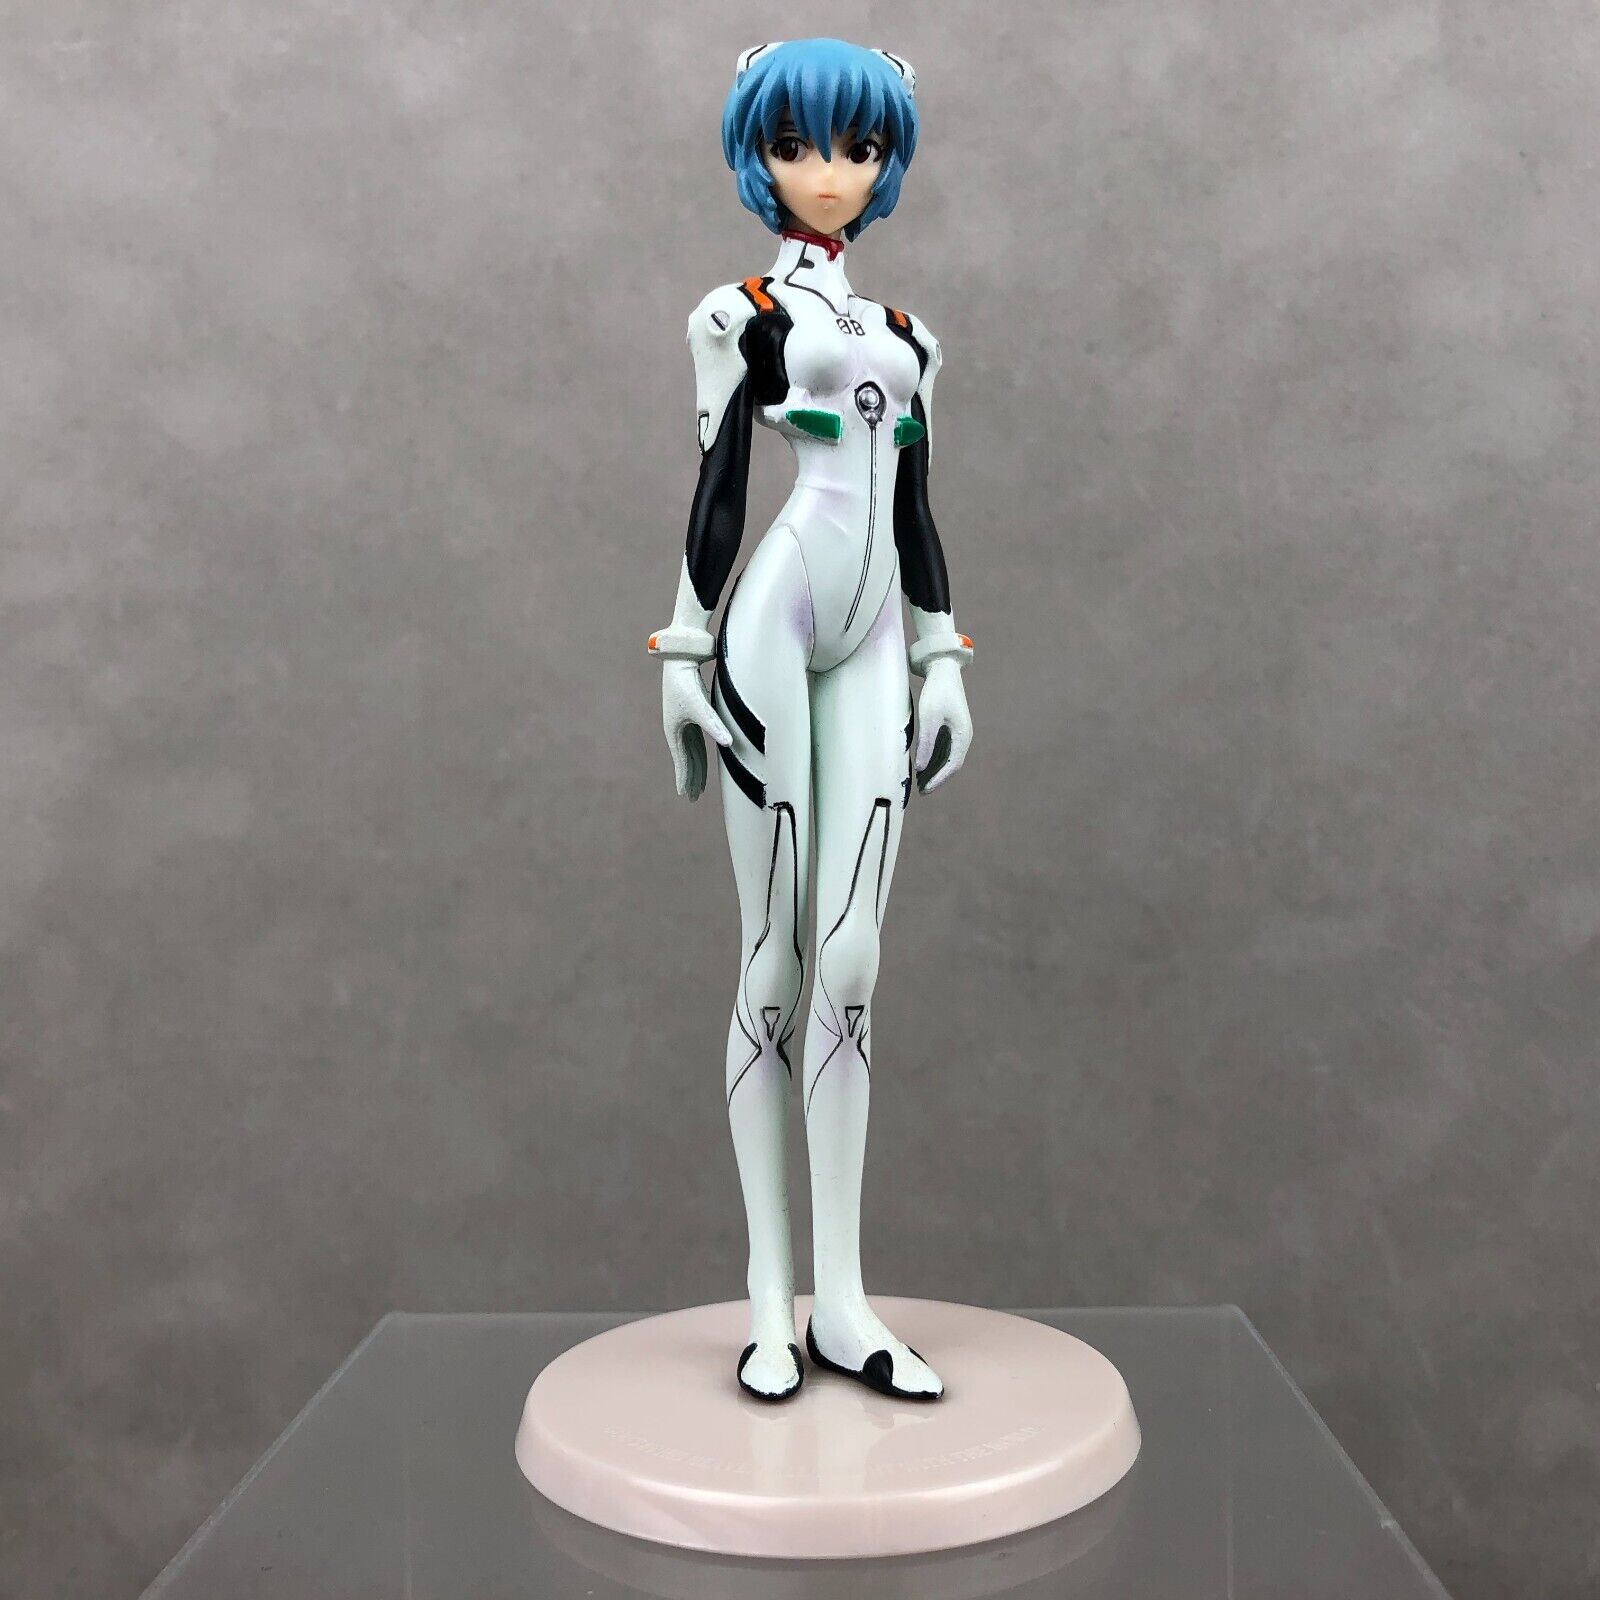 Bandai Neon Genesis Evangelion Ayanami Rei Portraits G Anime Figure Japan Import